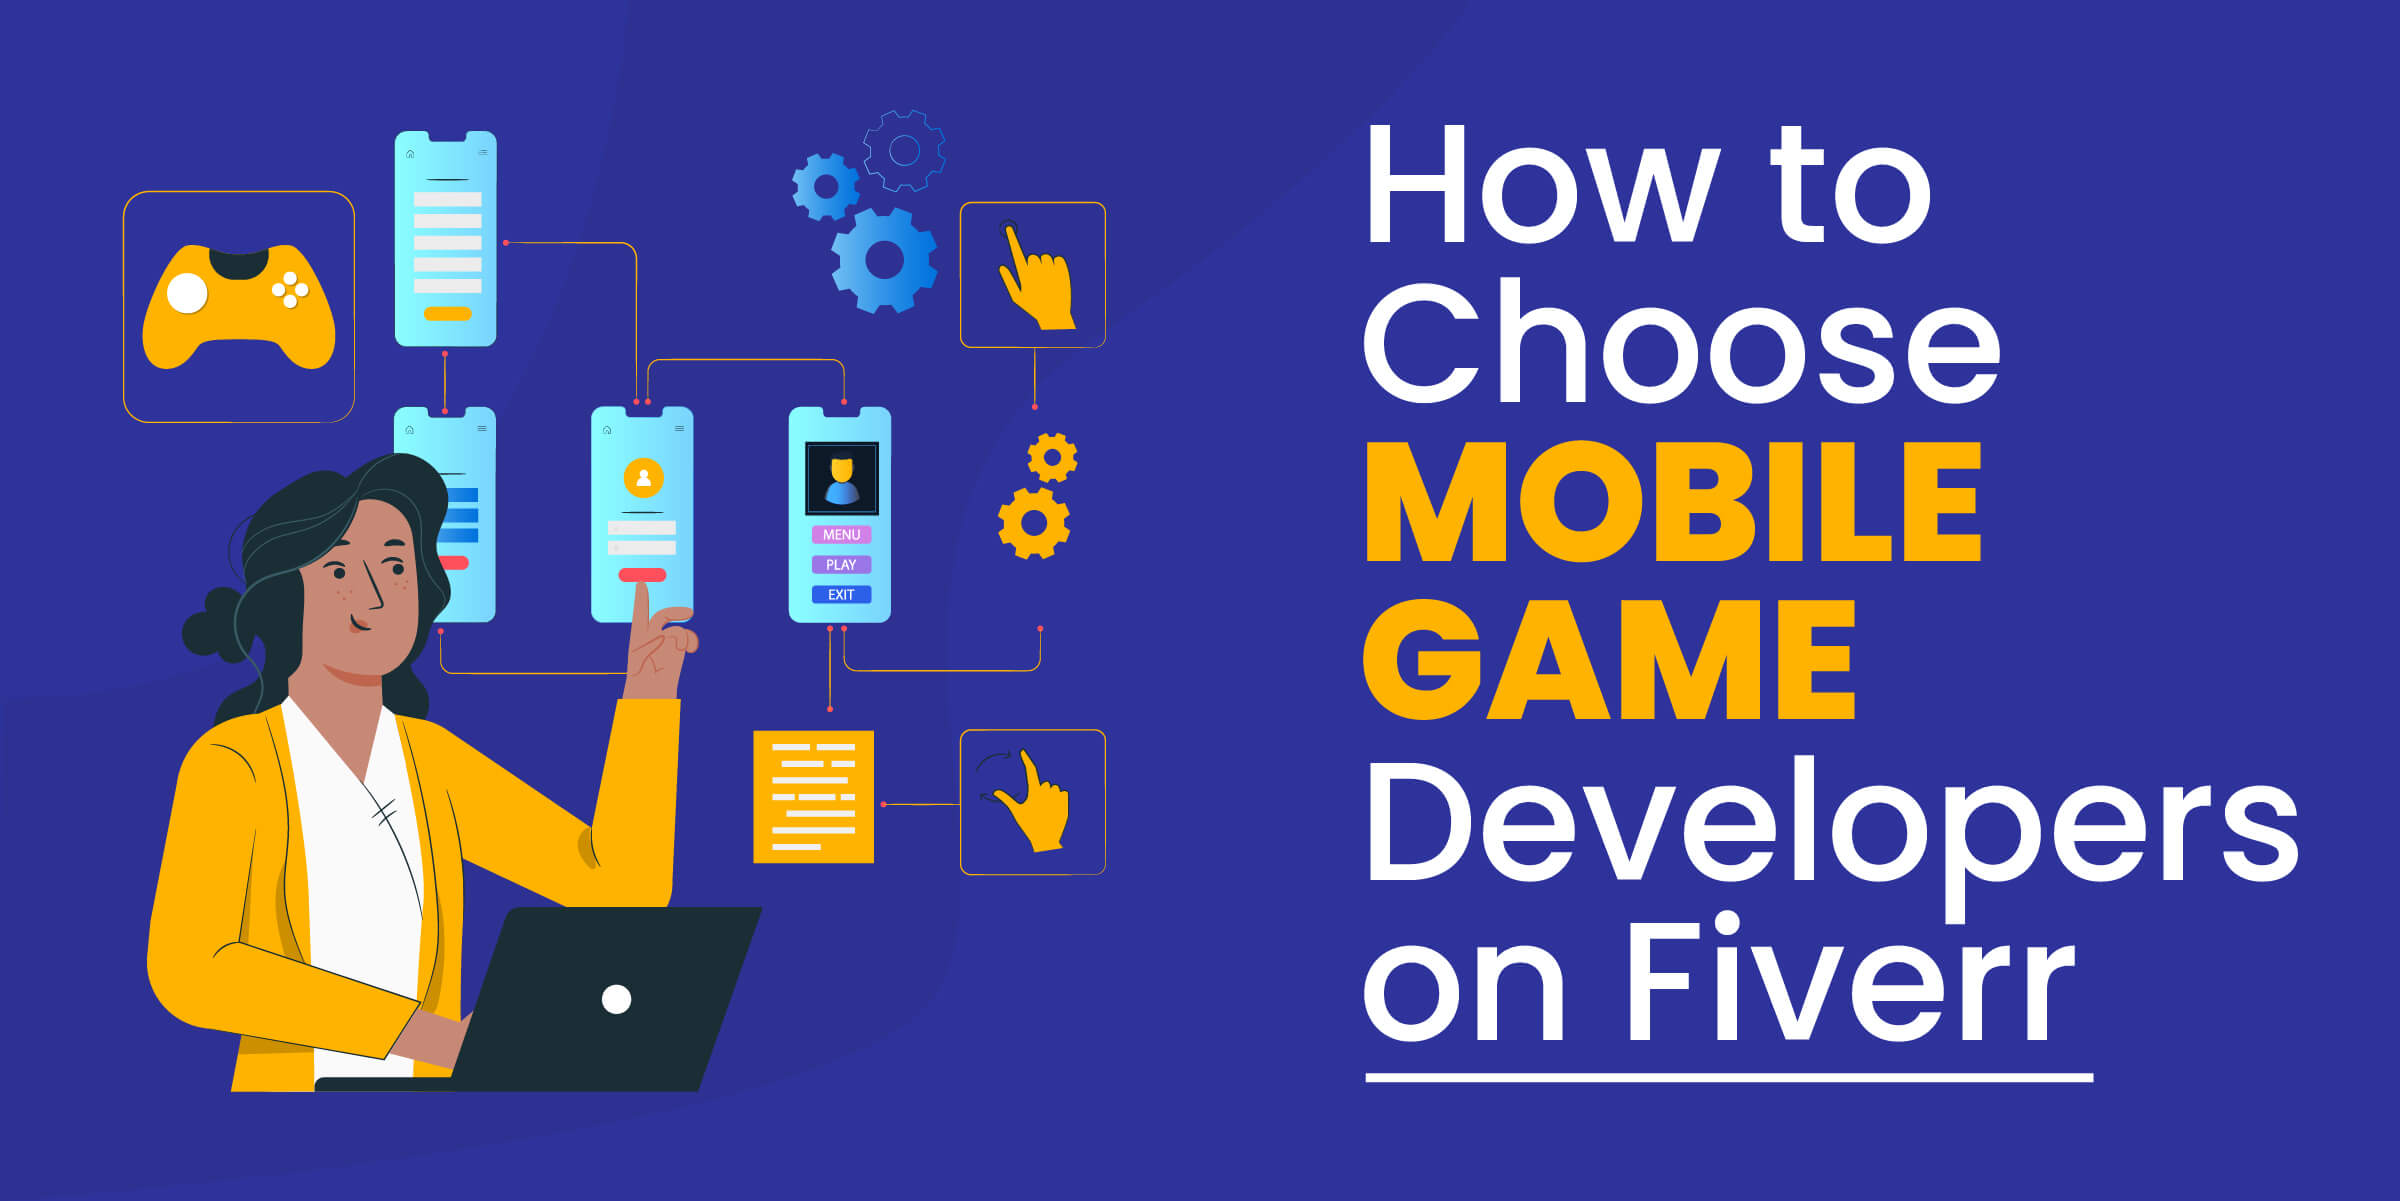 How to Choose Mobile Game Developer on Fiverr